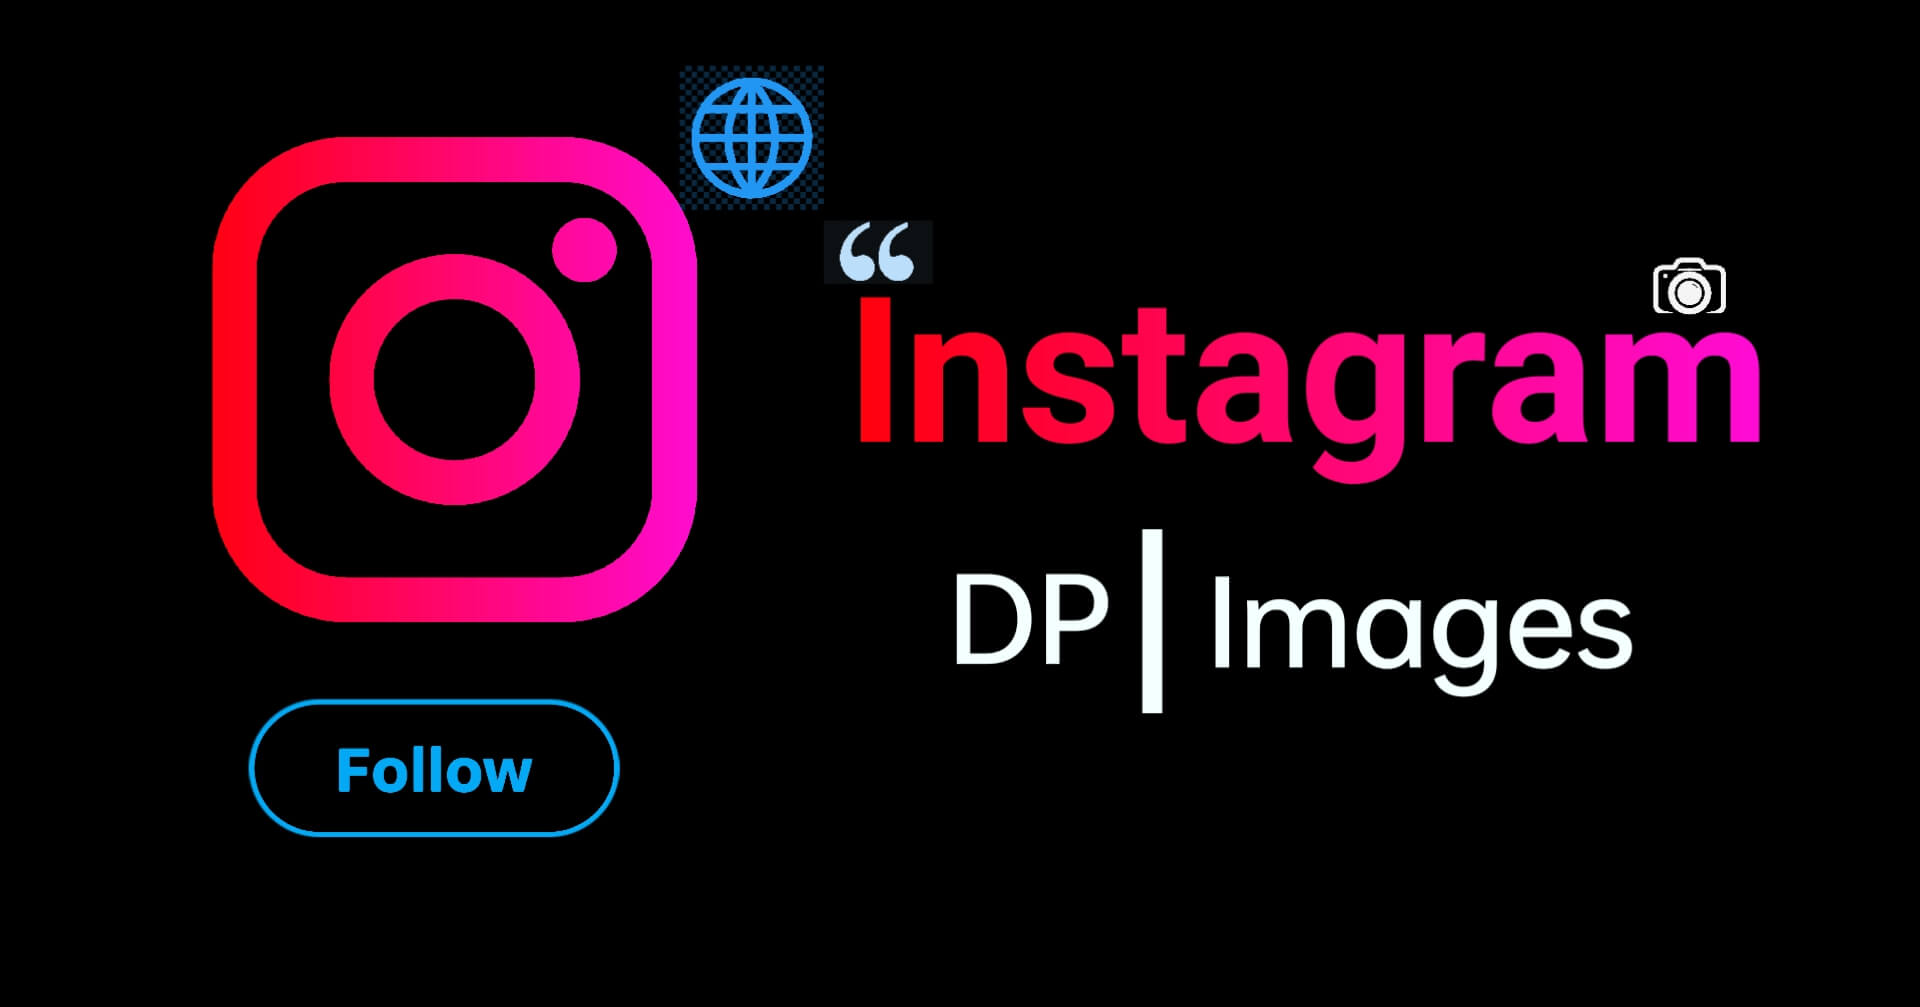 dp for Instagram